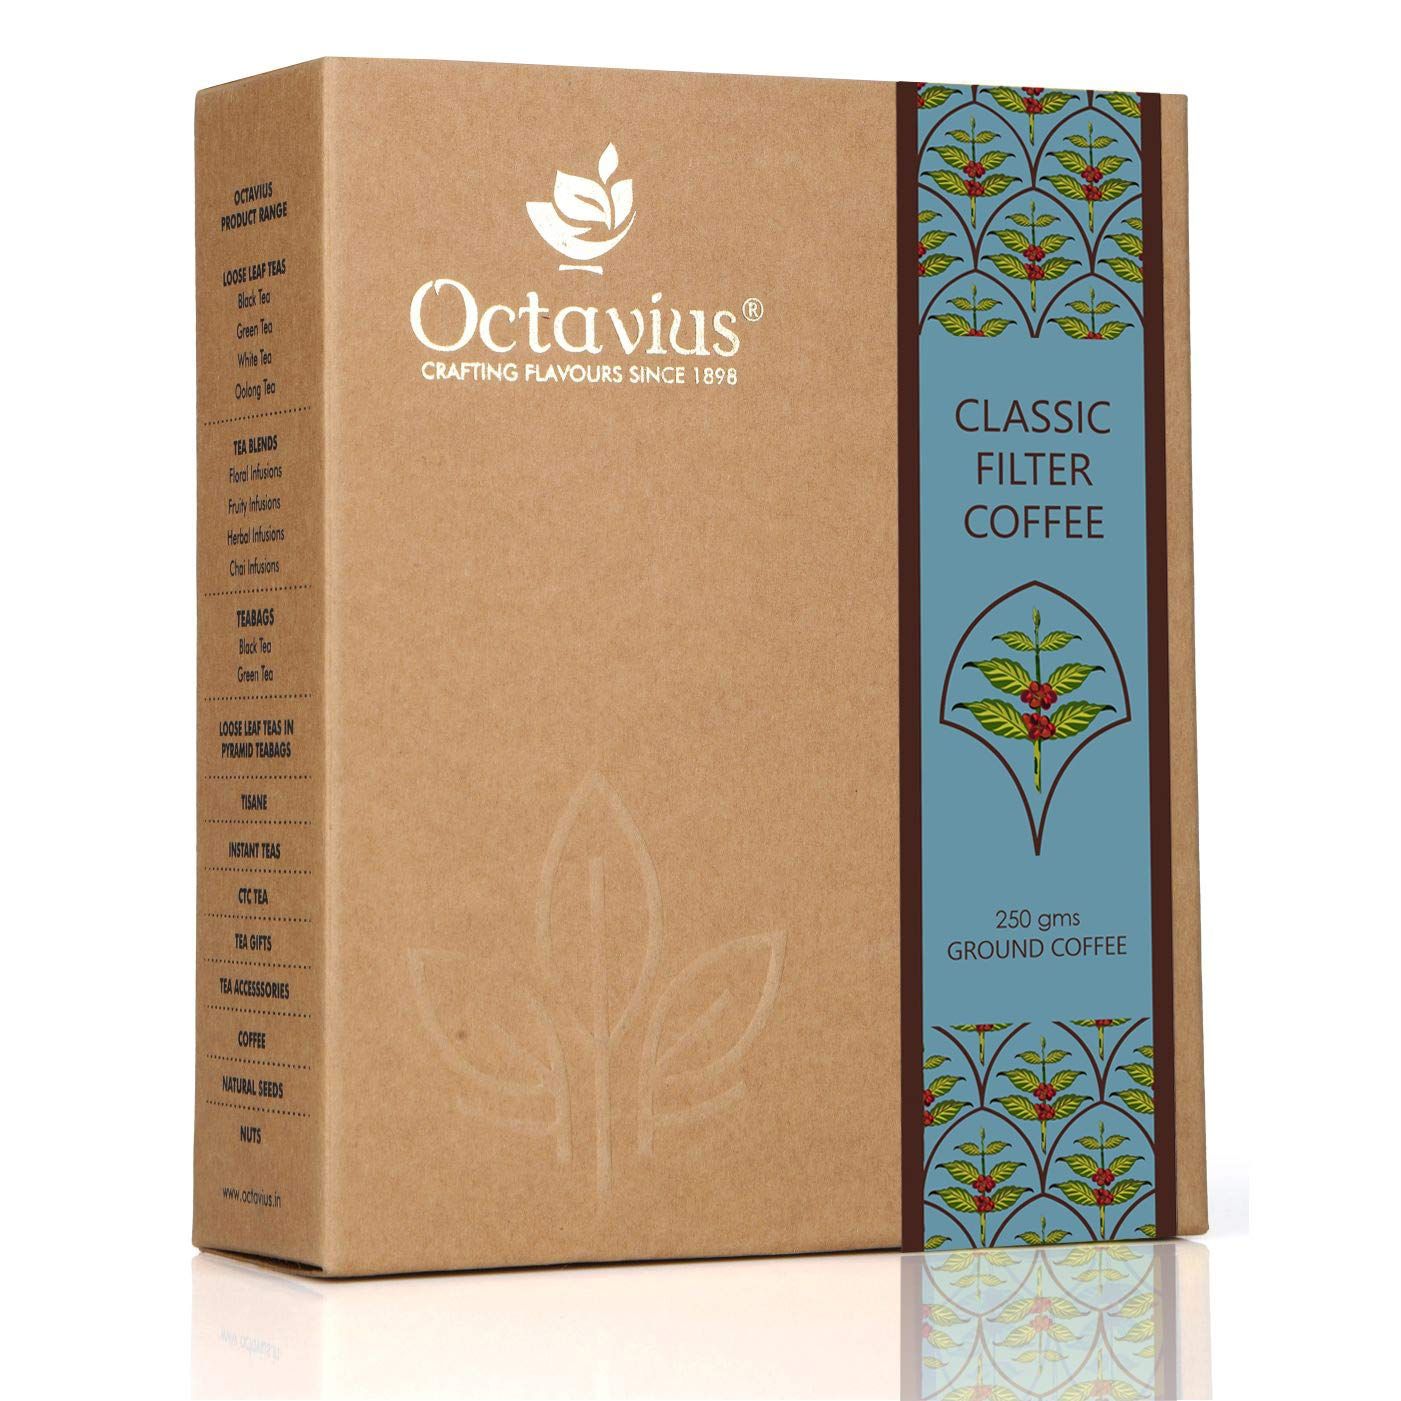 Octavis Classic Filter Coffee Image